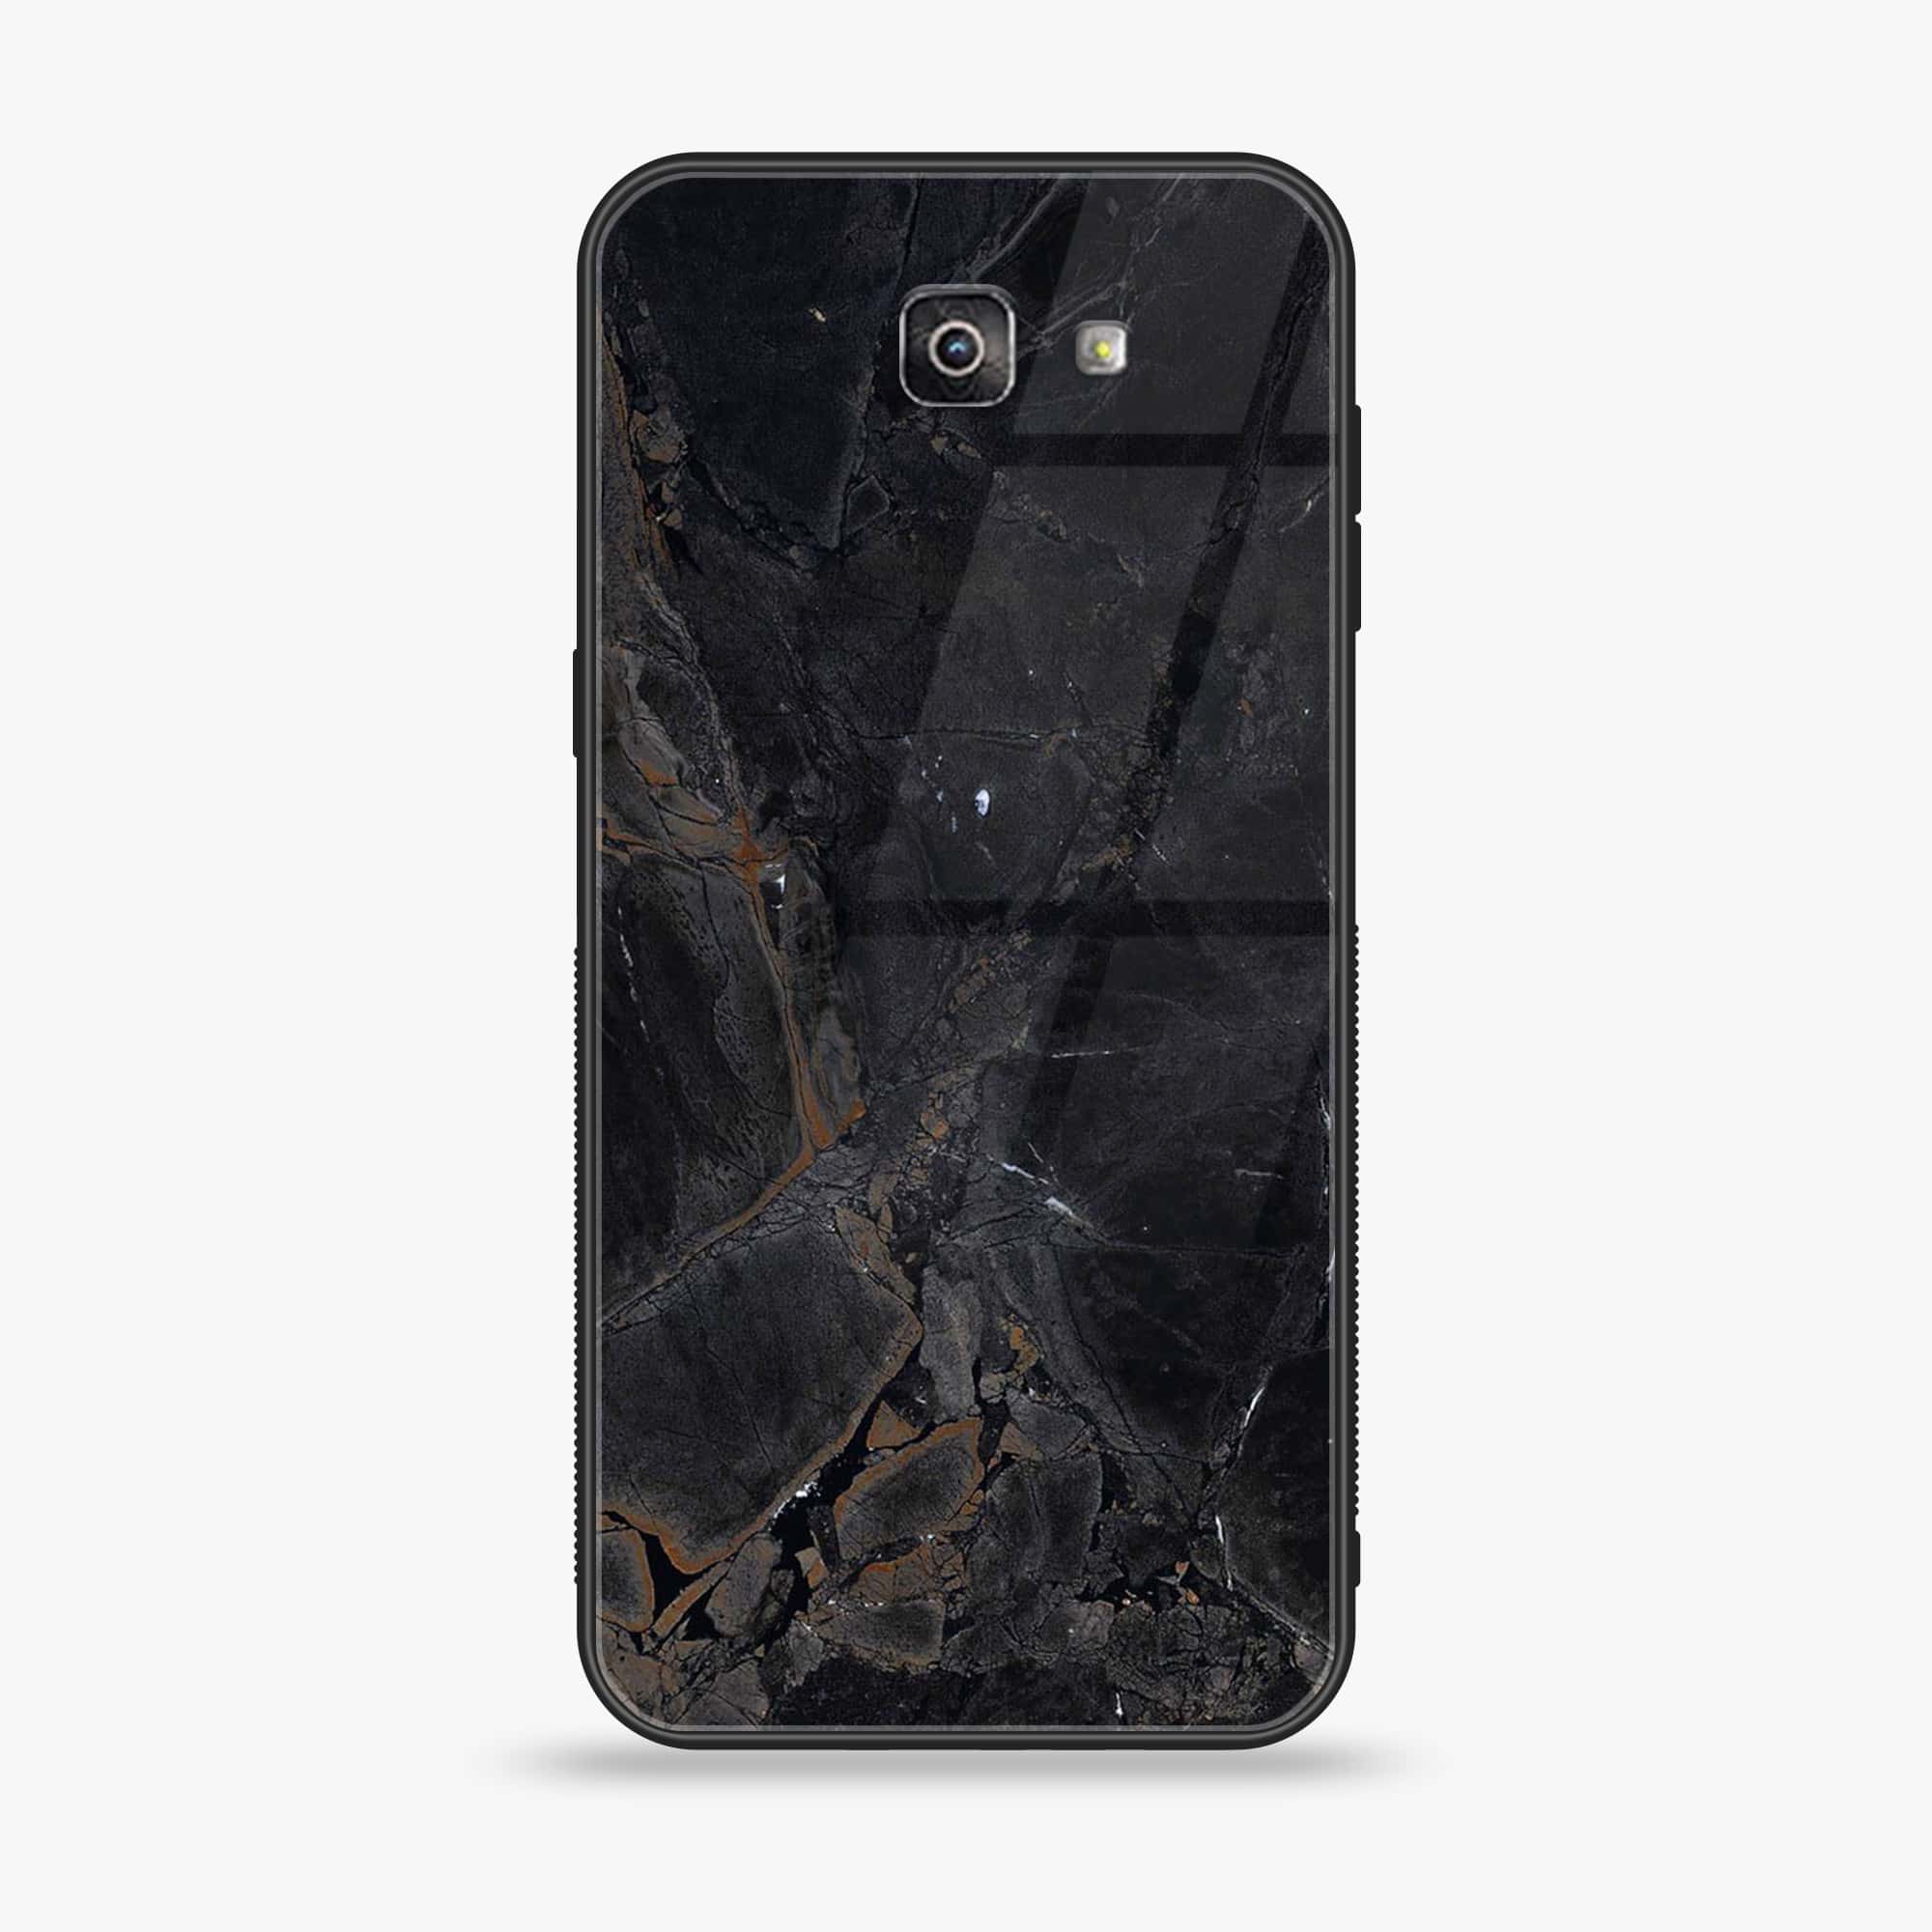 Galaxy J7 Prime 2018 - Black Marble 2.0 Series - Premium Printed Glass soft Bumper shock Proof Case